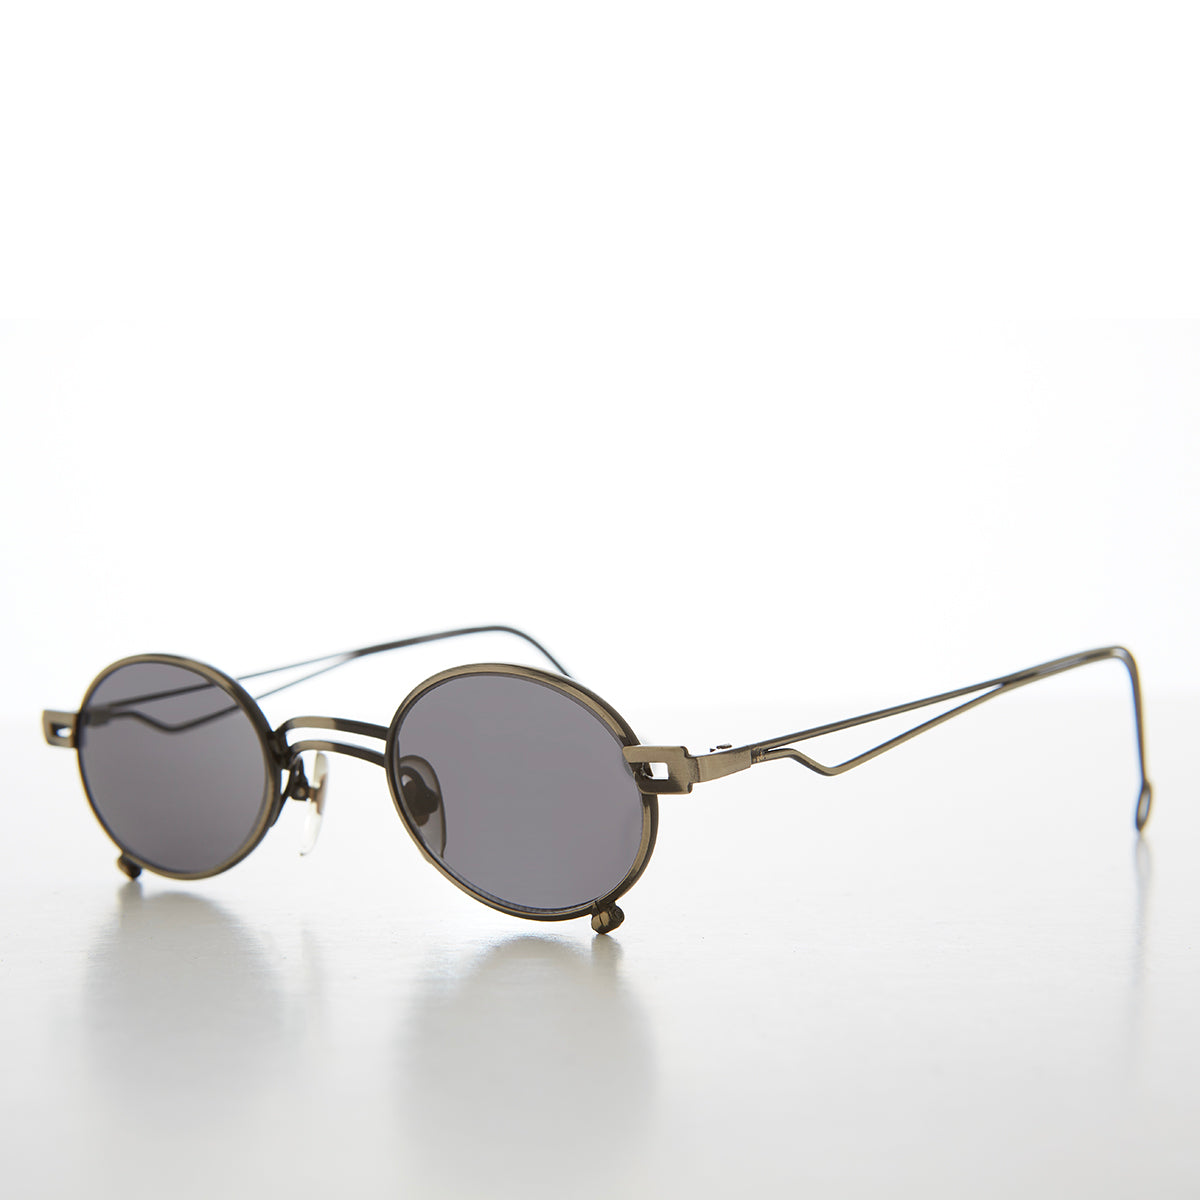 Shop PINE black vintage clear glasses for men | Giant Vintage Sunglasses